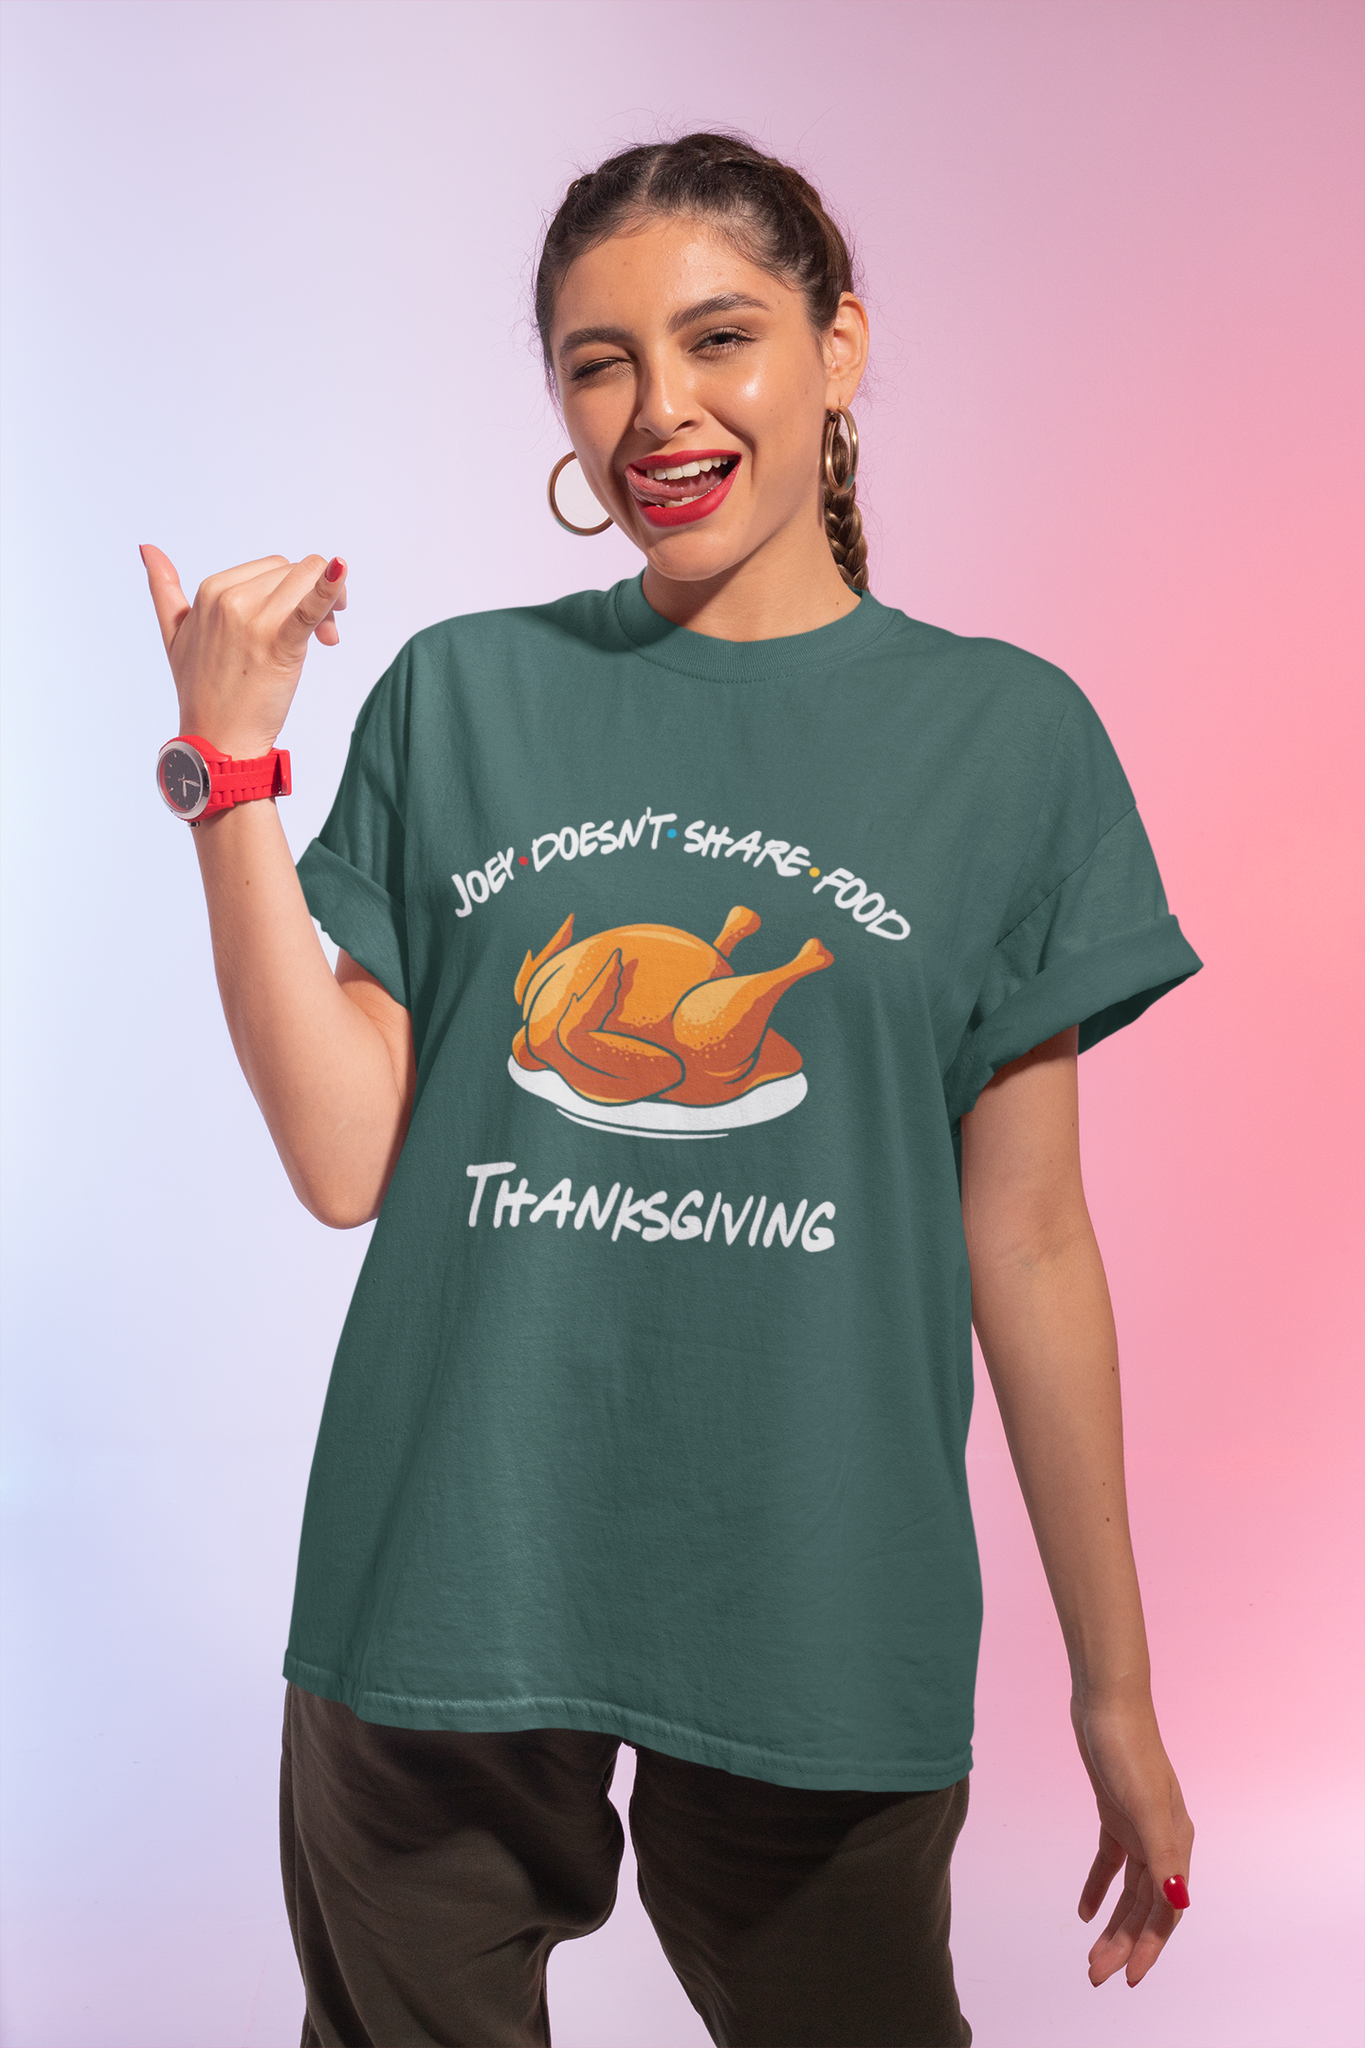 Friends TV Show T Shirt, Friends Shirt, Turkey Thanksgiving T Shirt, Joey Doesnt Share Food Tshirt, Thanksgiving Gifts